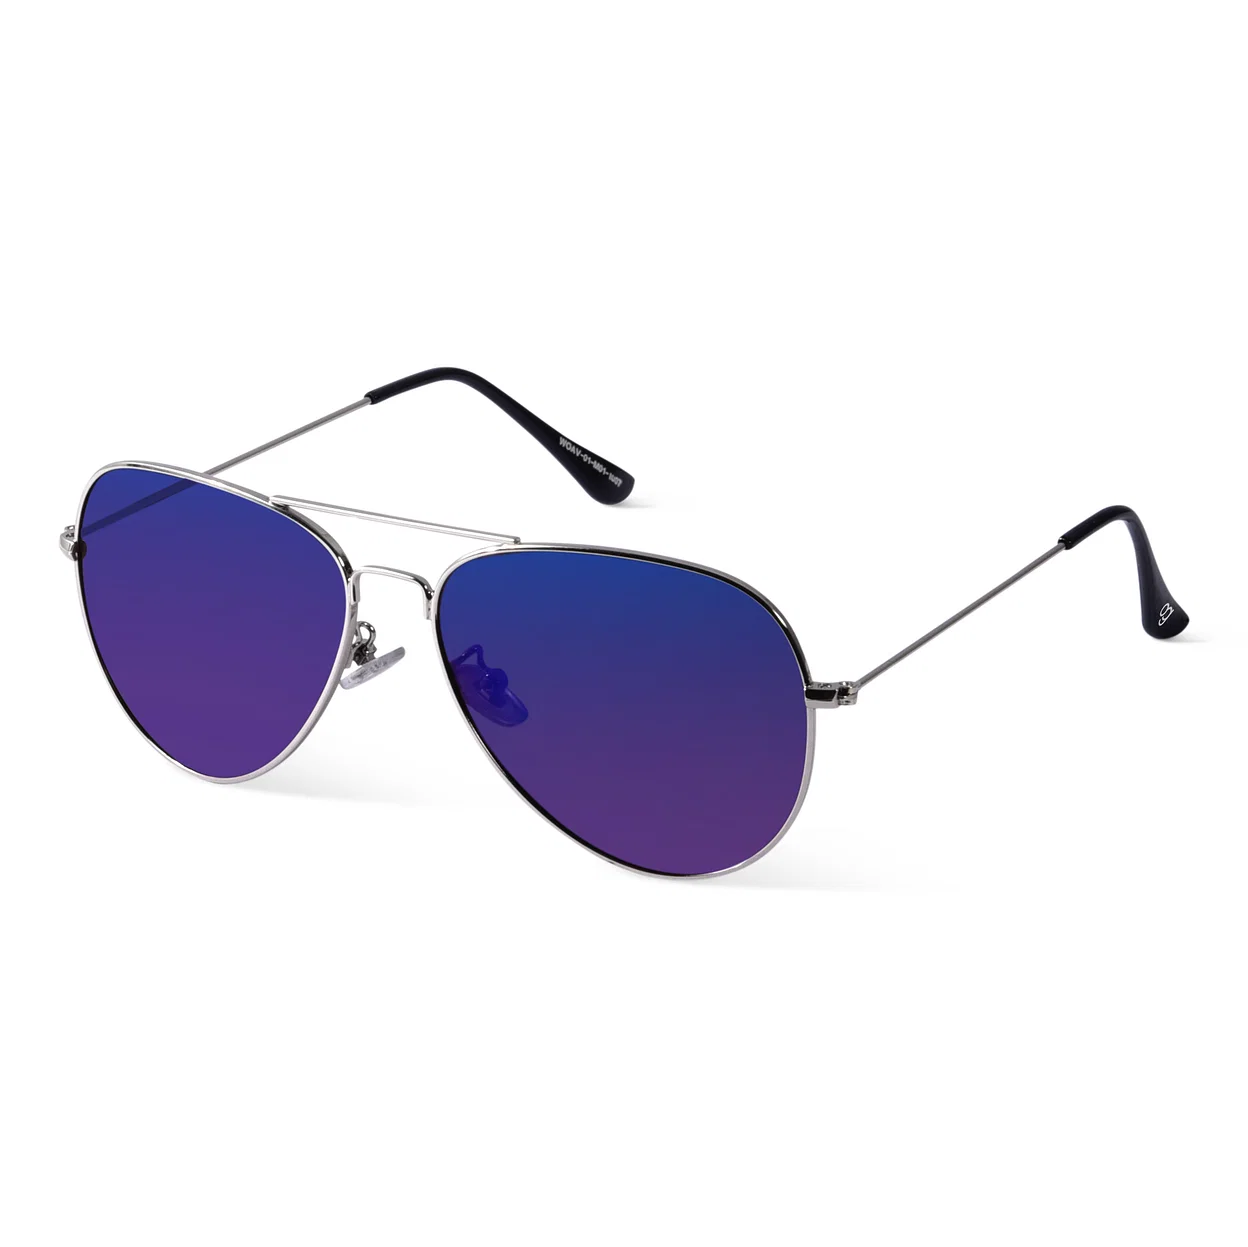 Buy Electric Blue Polarized Aviator Sunglasses - Woggles